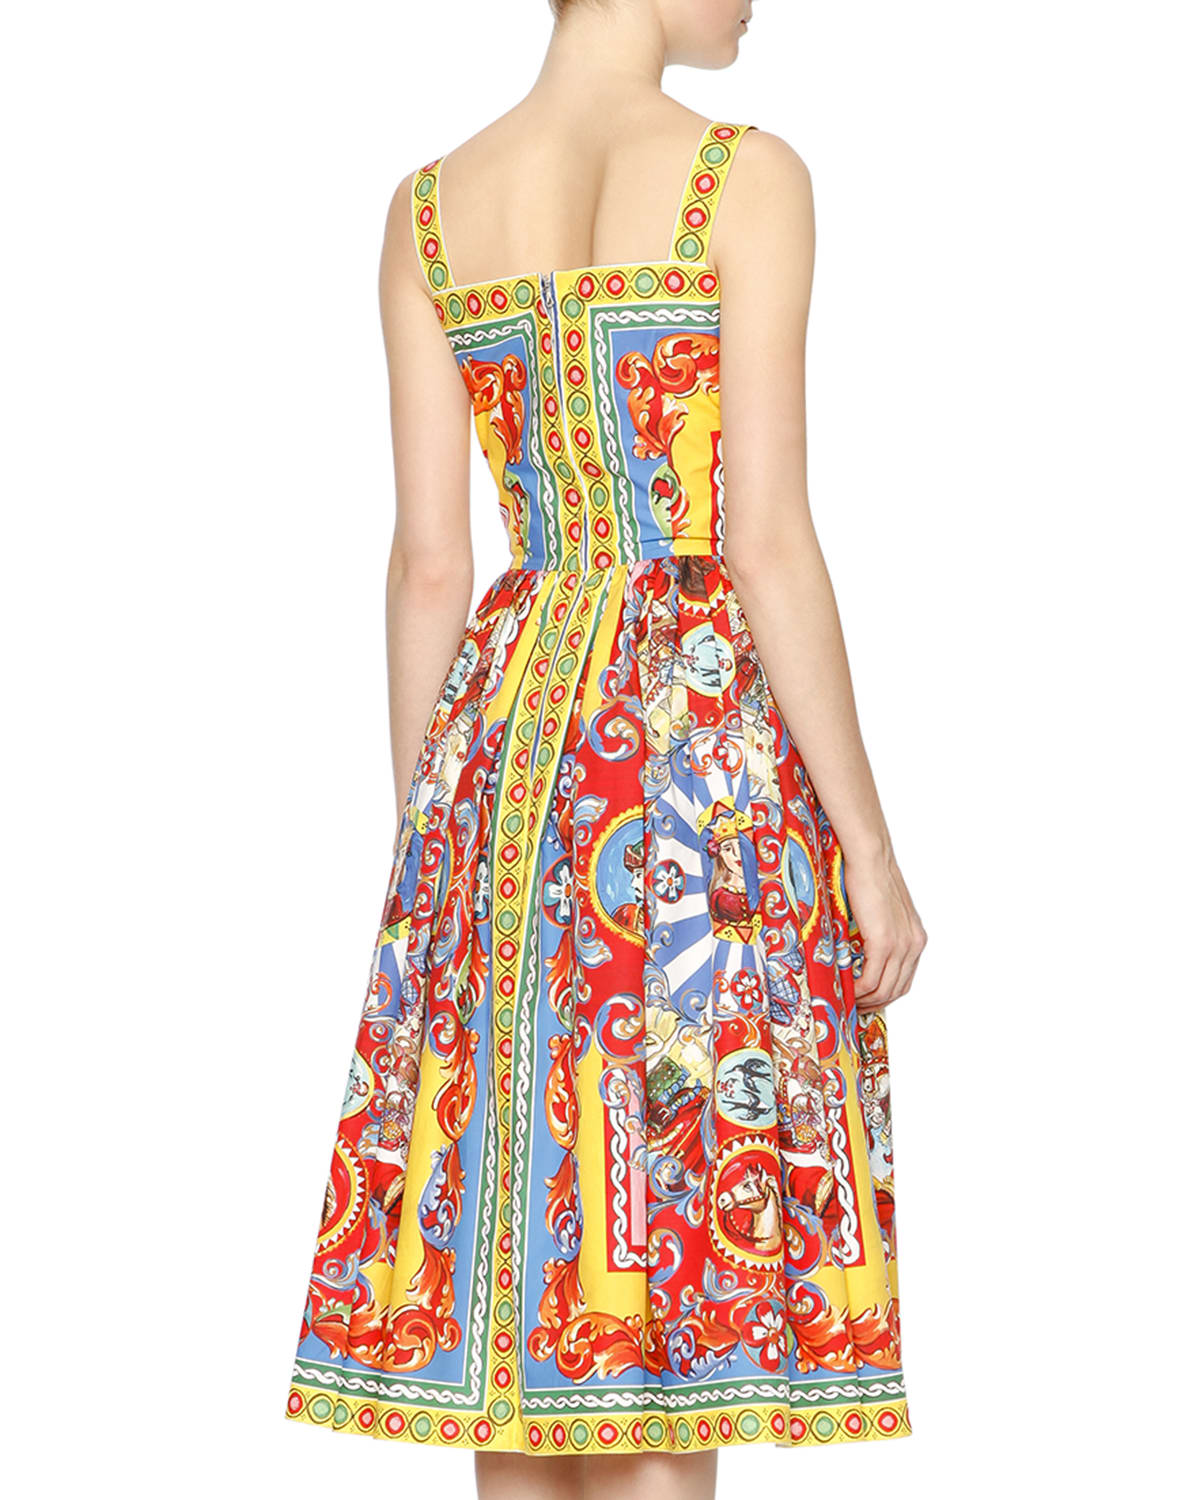 Dolce & Gabbana Sleeveless Carretto-Print Dress, Red/Yellow/Blue